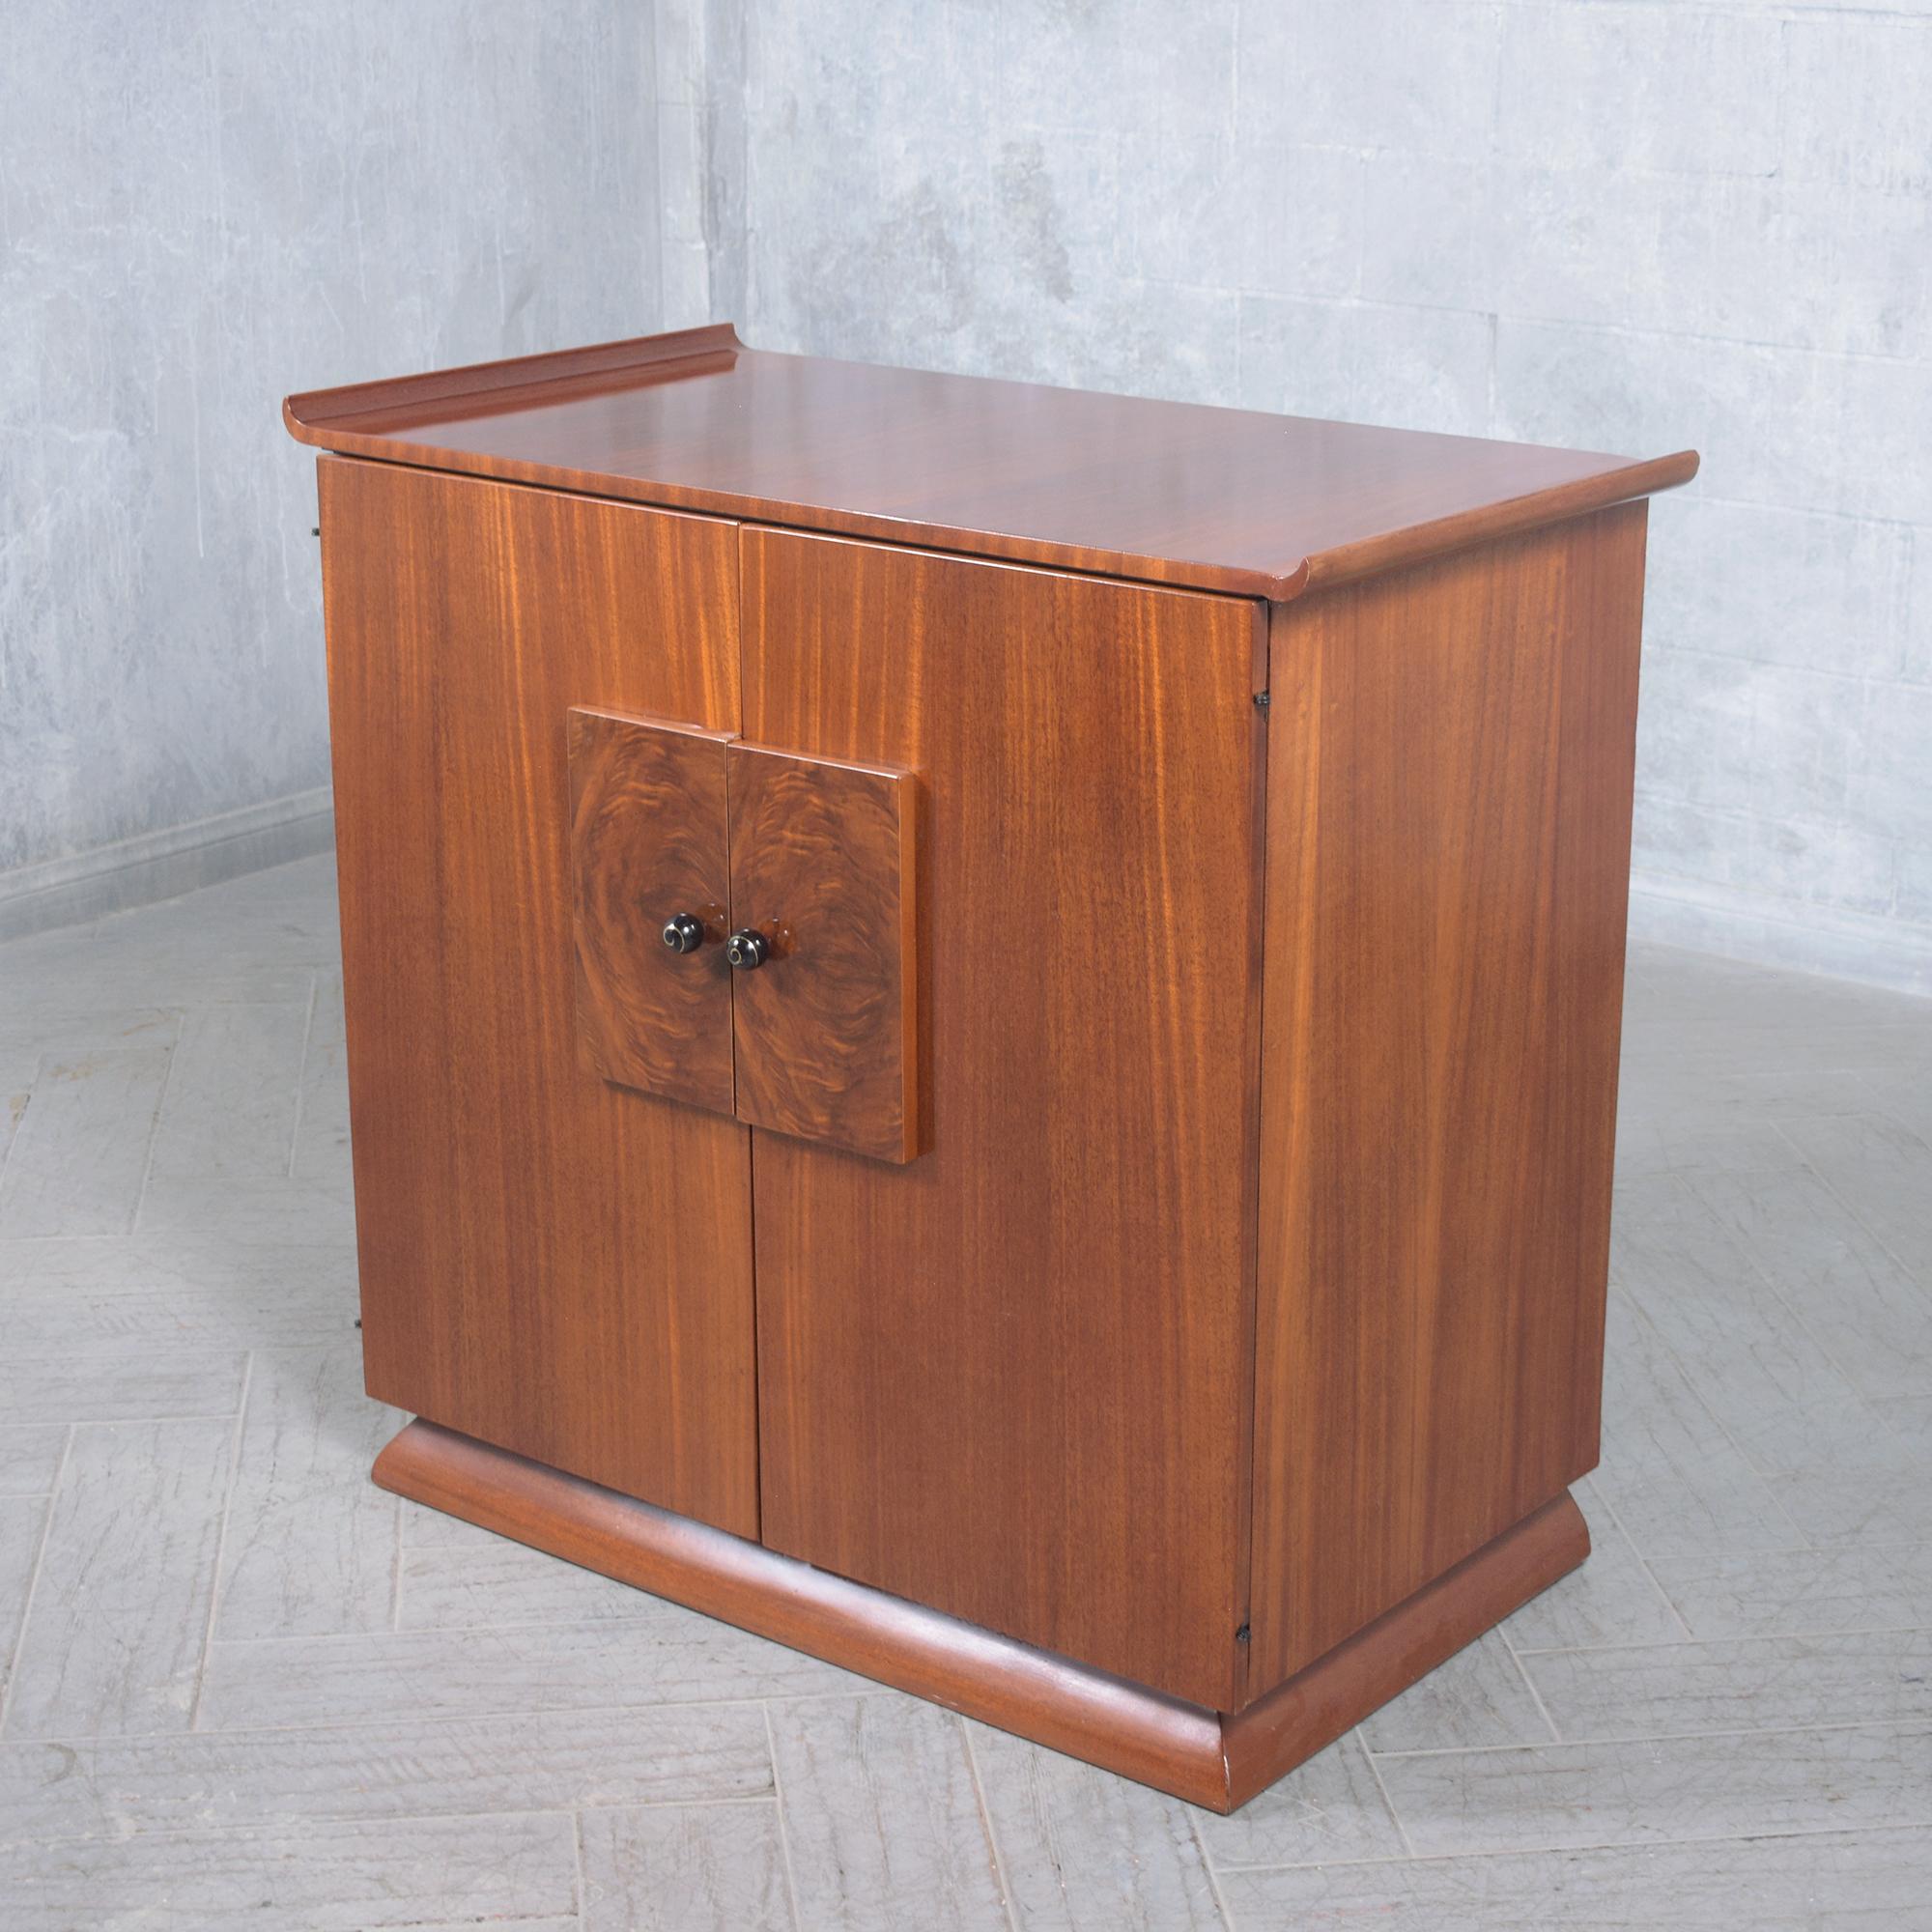 Polished Restored Vintage Mid-Century Wood Cabinet with Burl Door Details